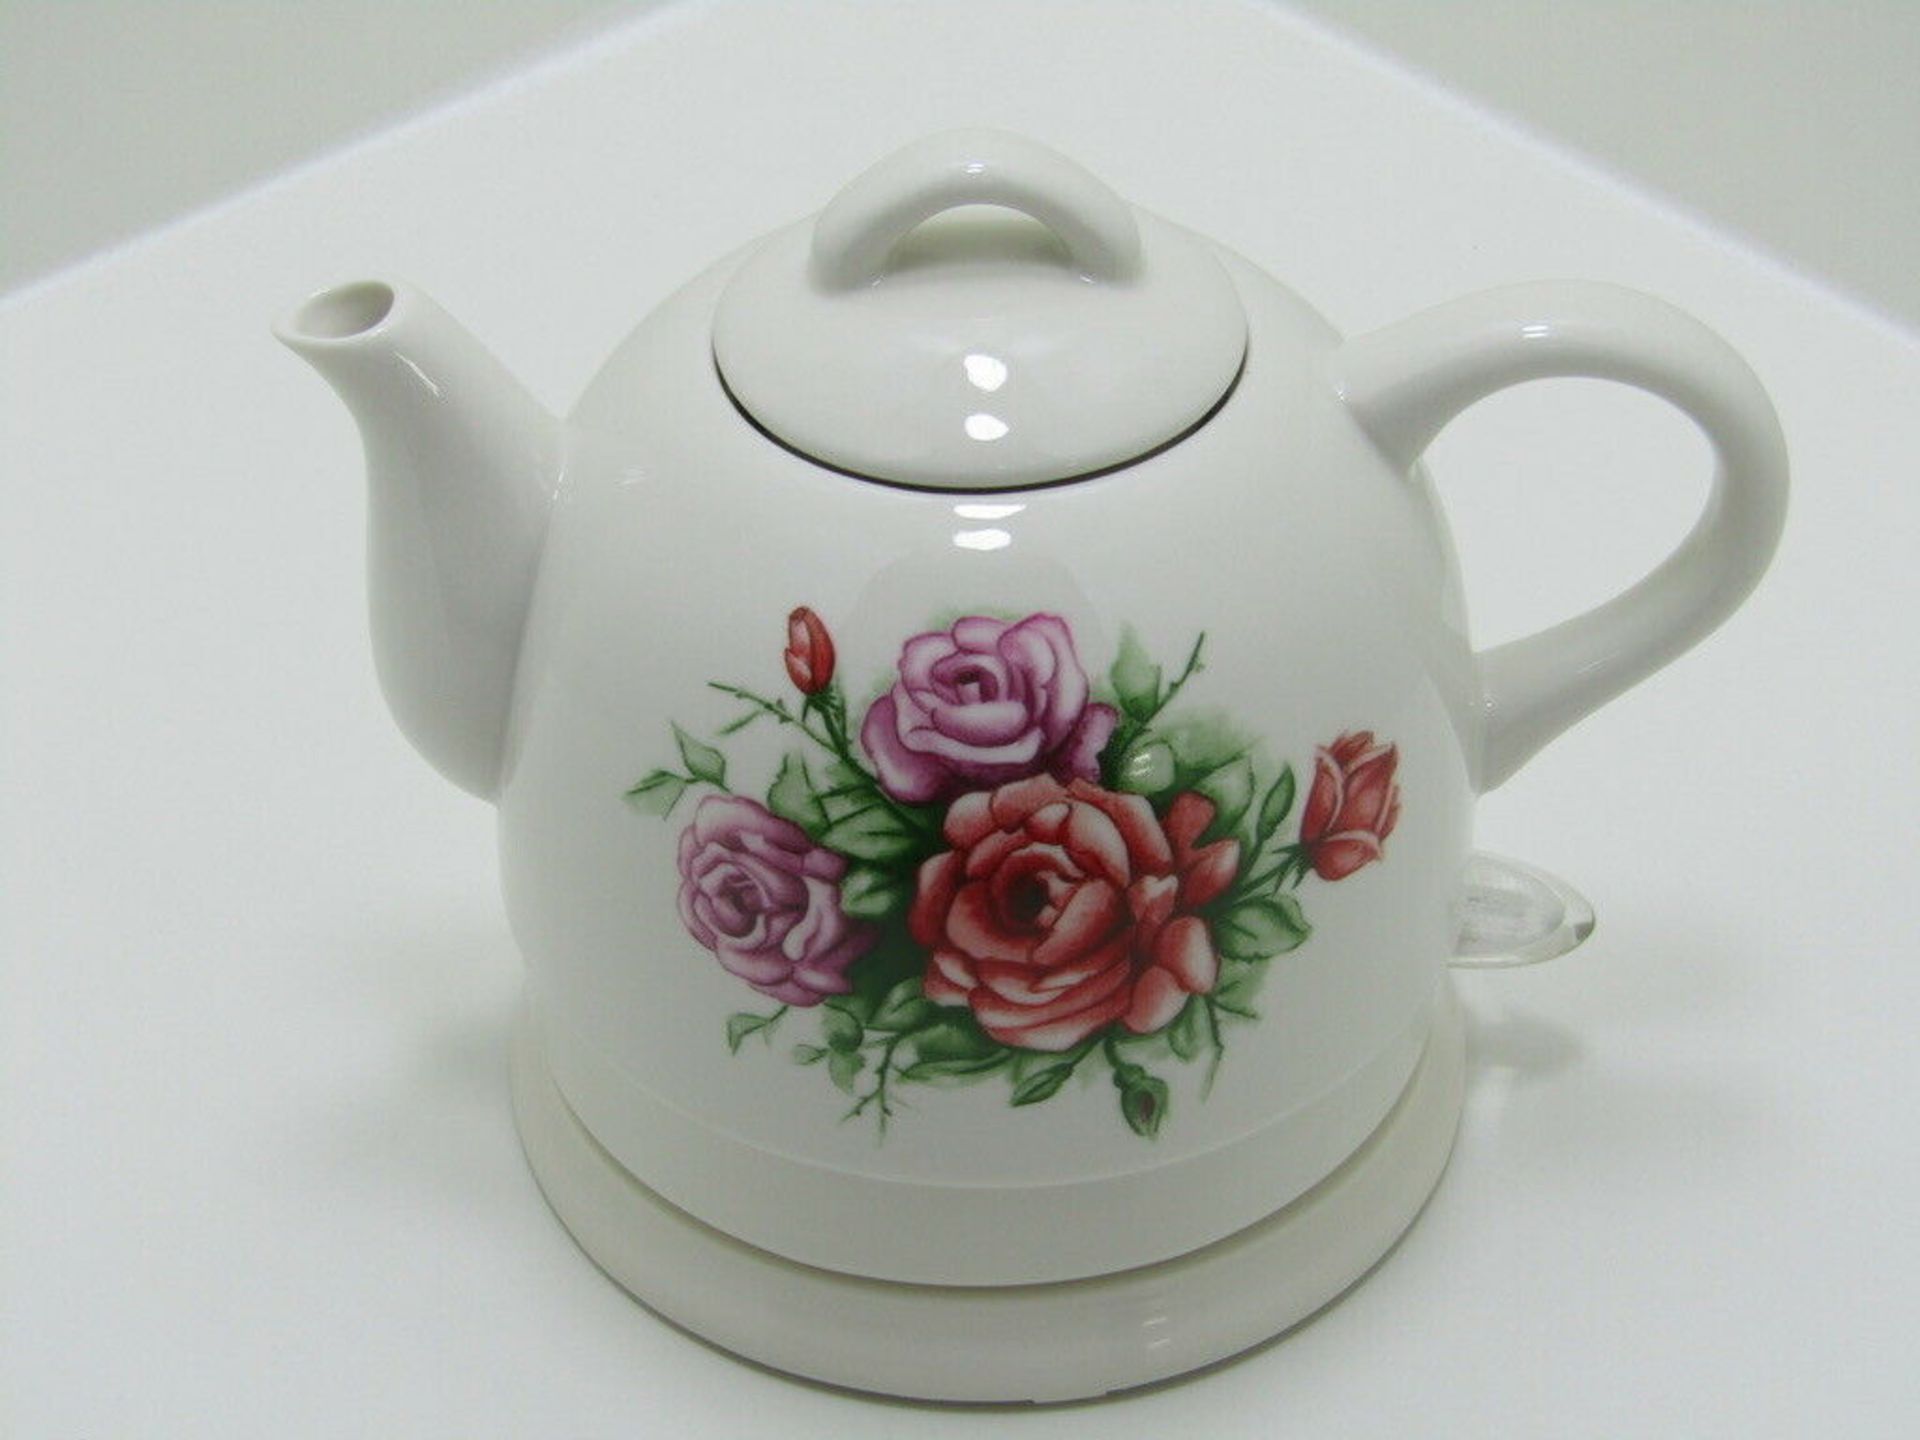 Country Rose Ceramic Kettle. White. Cordless. Tea Pot design. VJ905 - Image 2 of 8